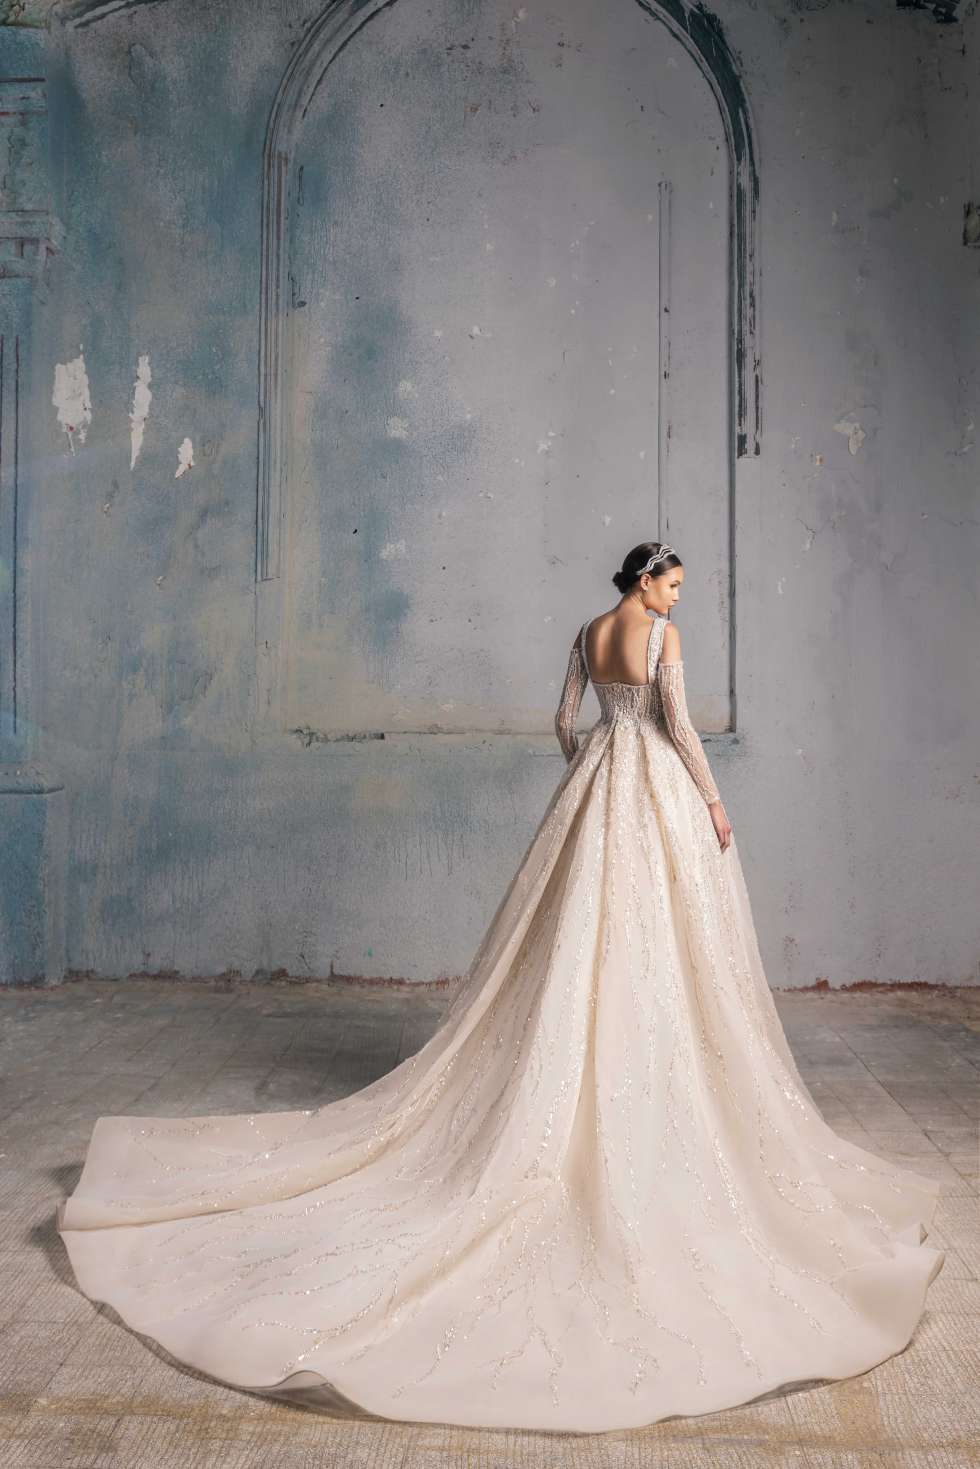 La Dolce Vita 2023 Fall Wedding Dress Collection by Tony Ward